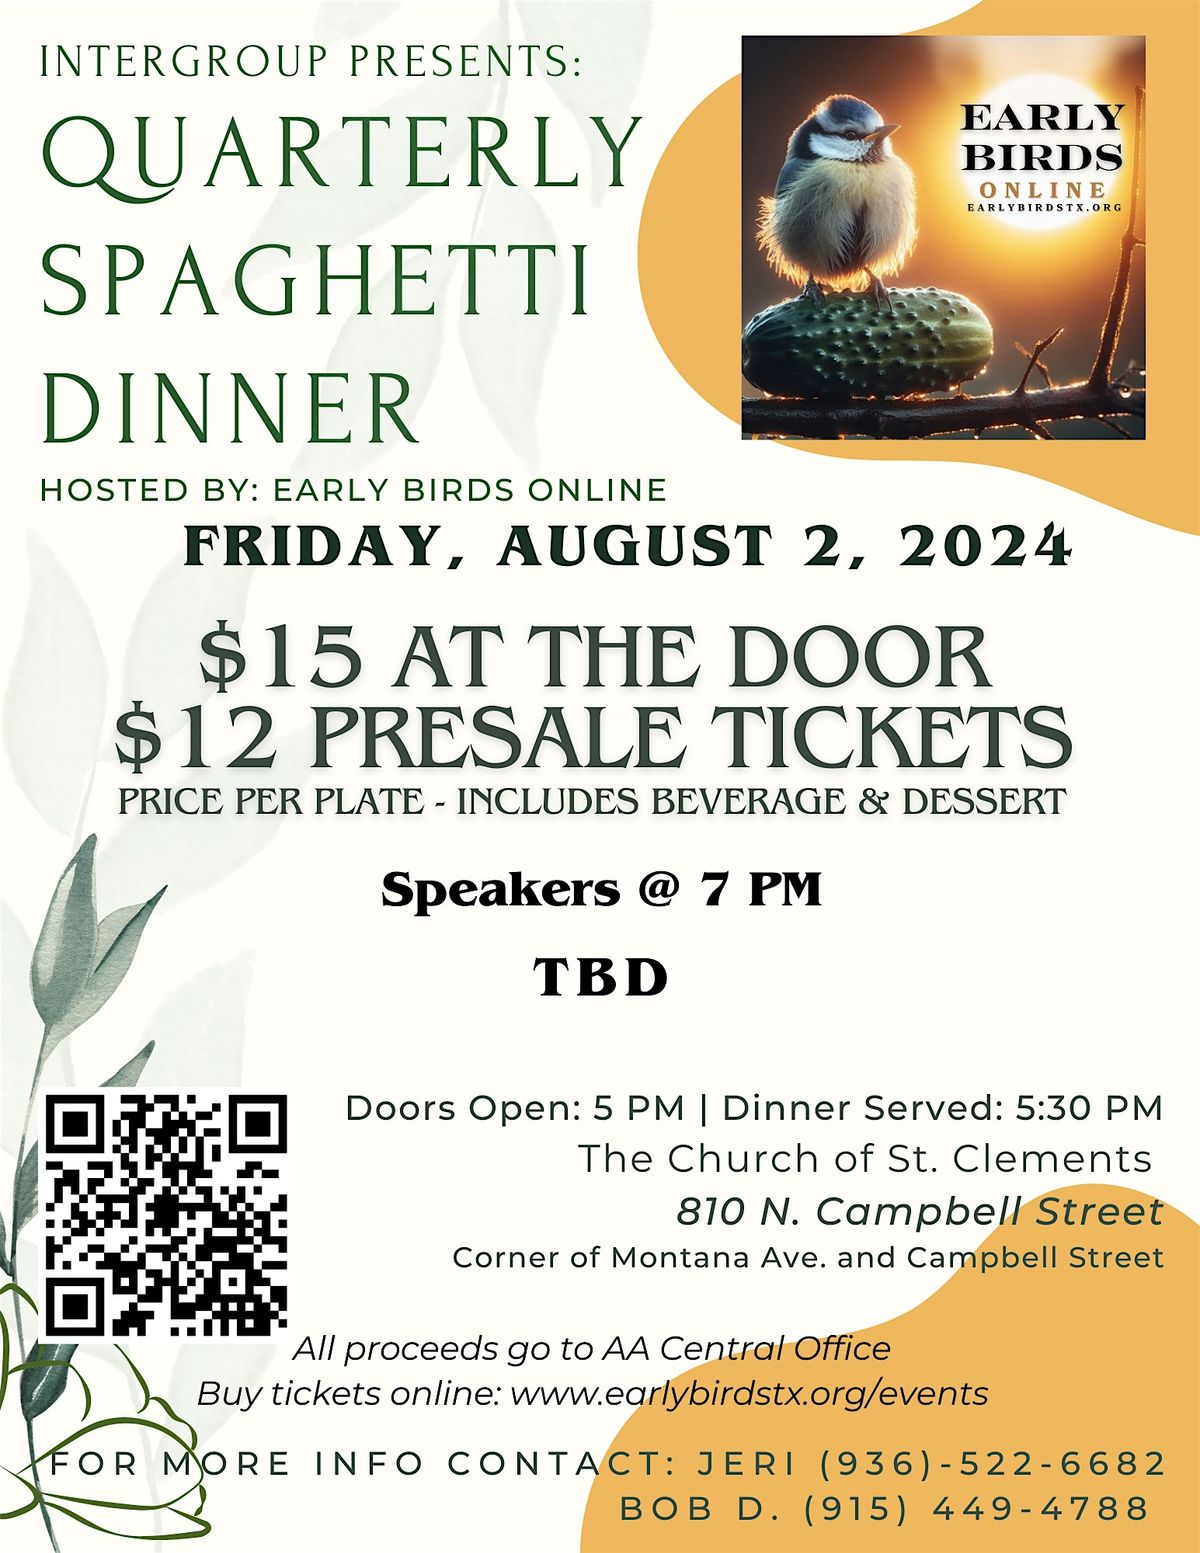 Intergroup Presents: Quarterly Spaghetti Dinner - August 2, 2024